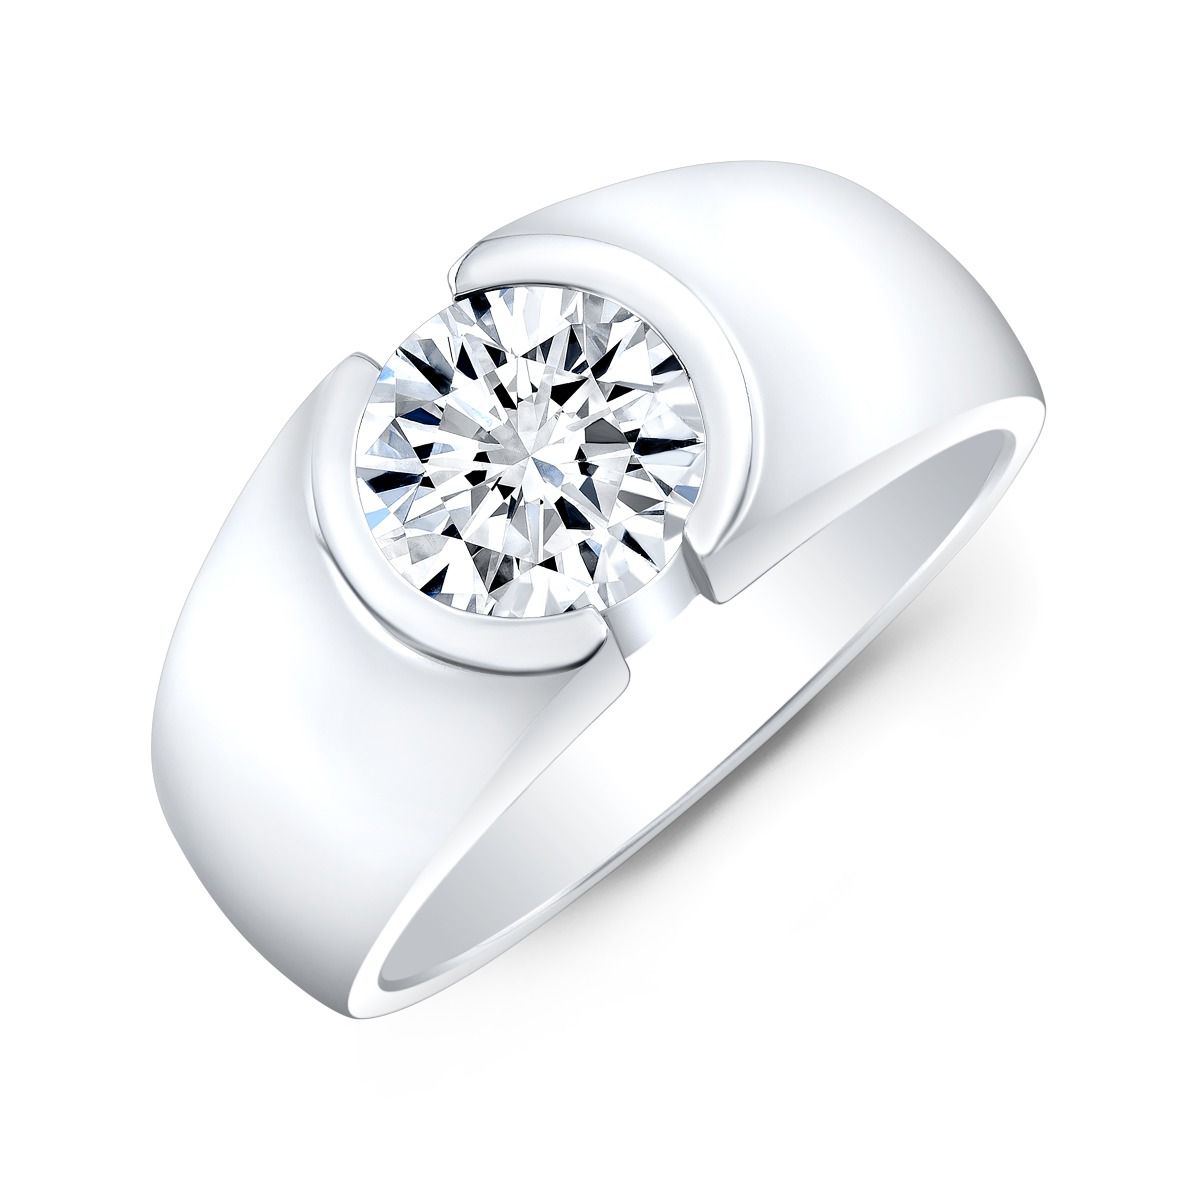 6 Steps to Buying a One-Carat Diamond Ring - International Gem Society